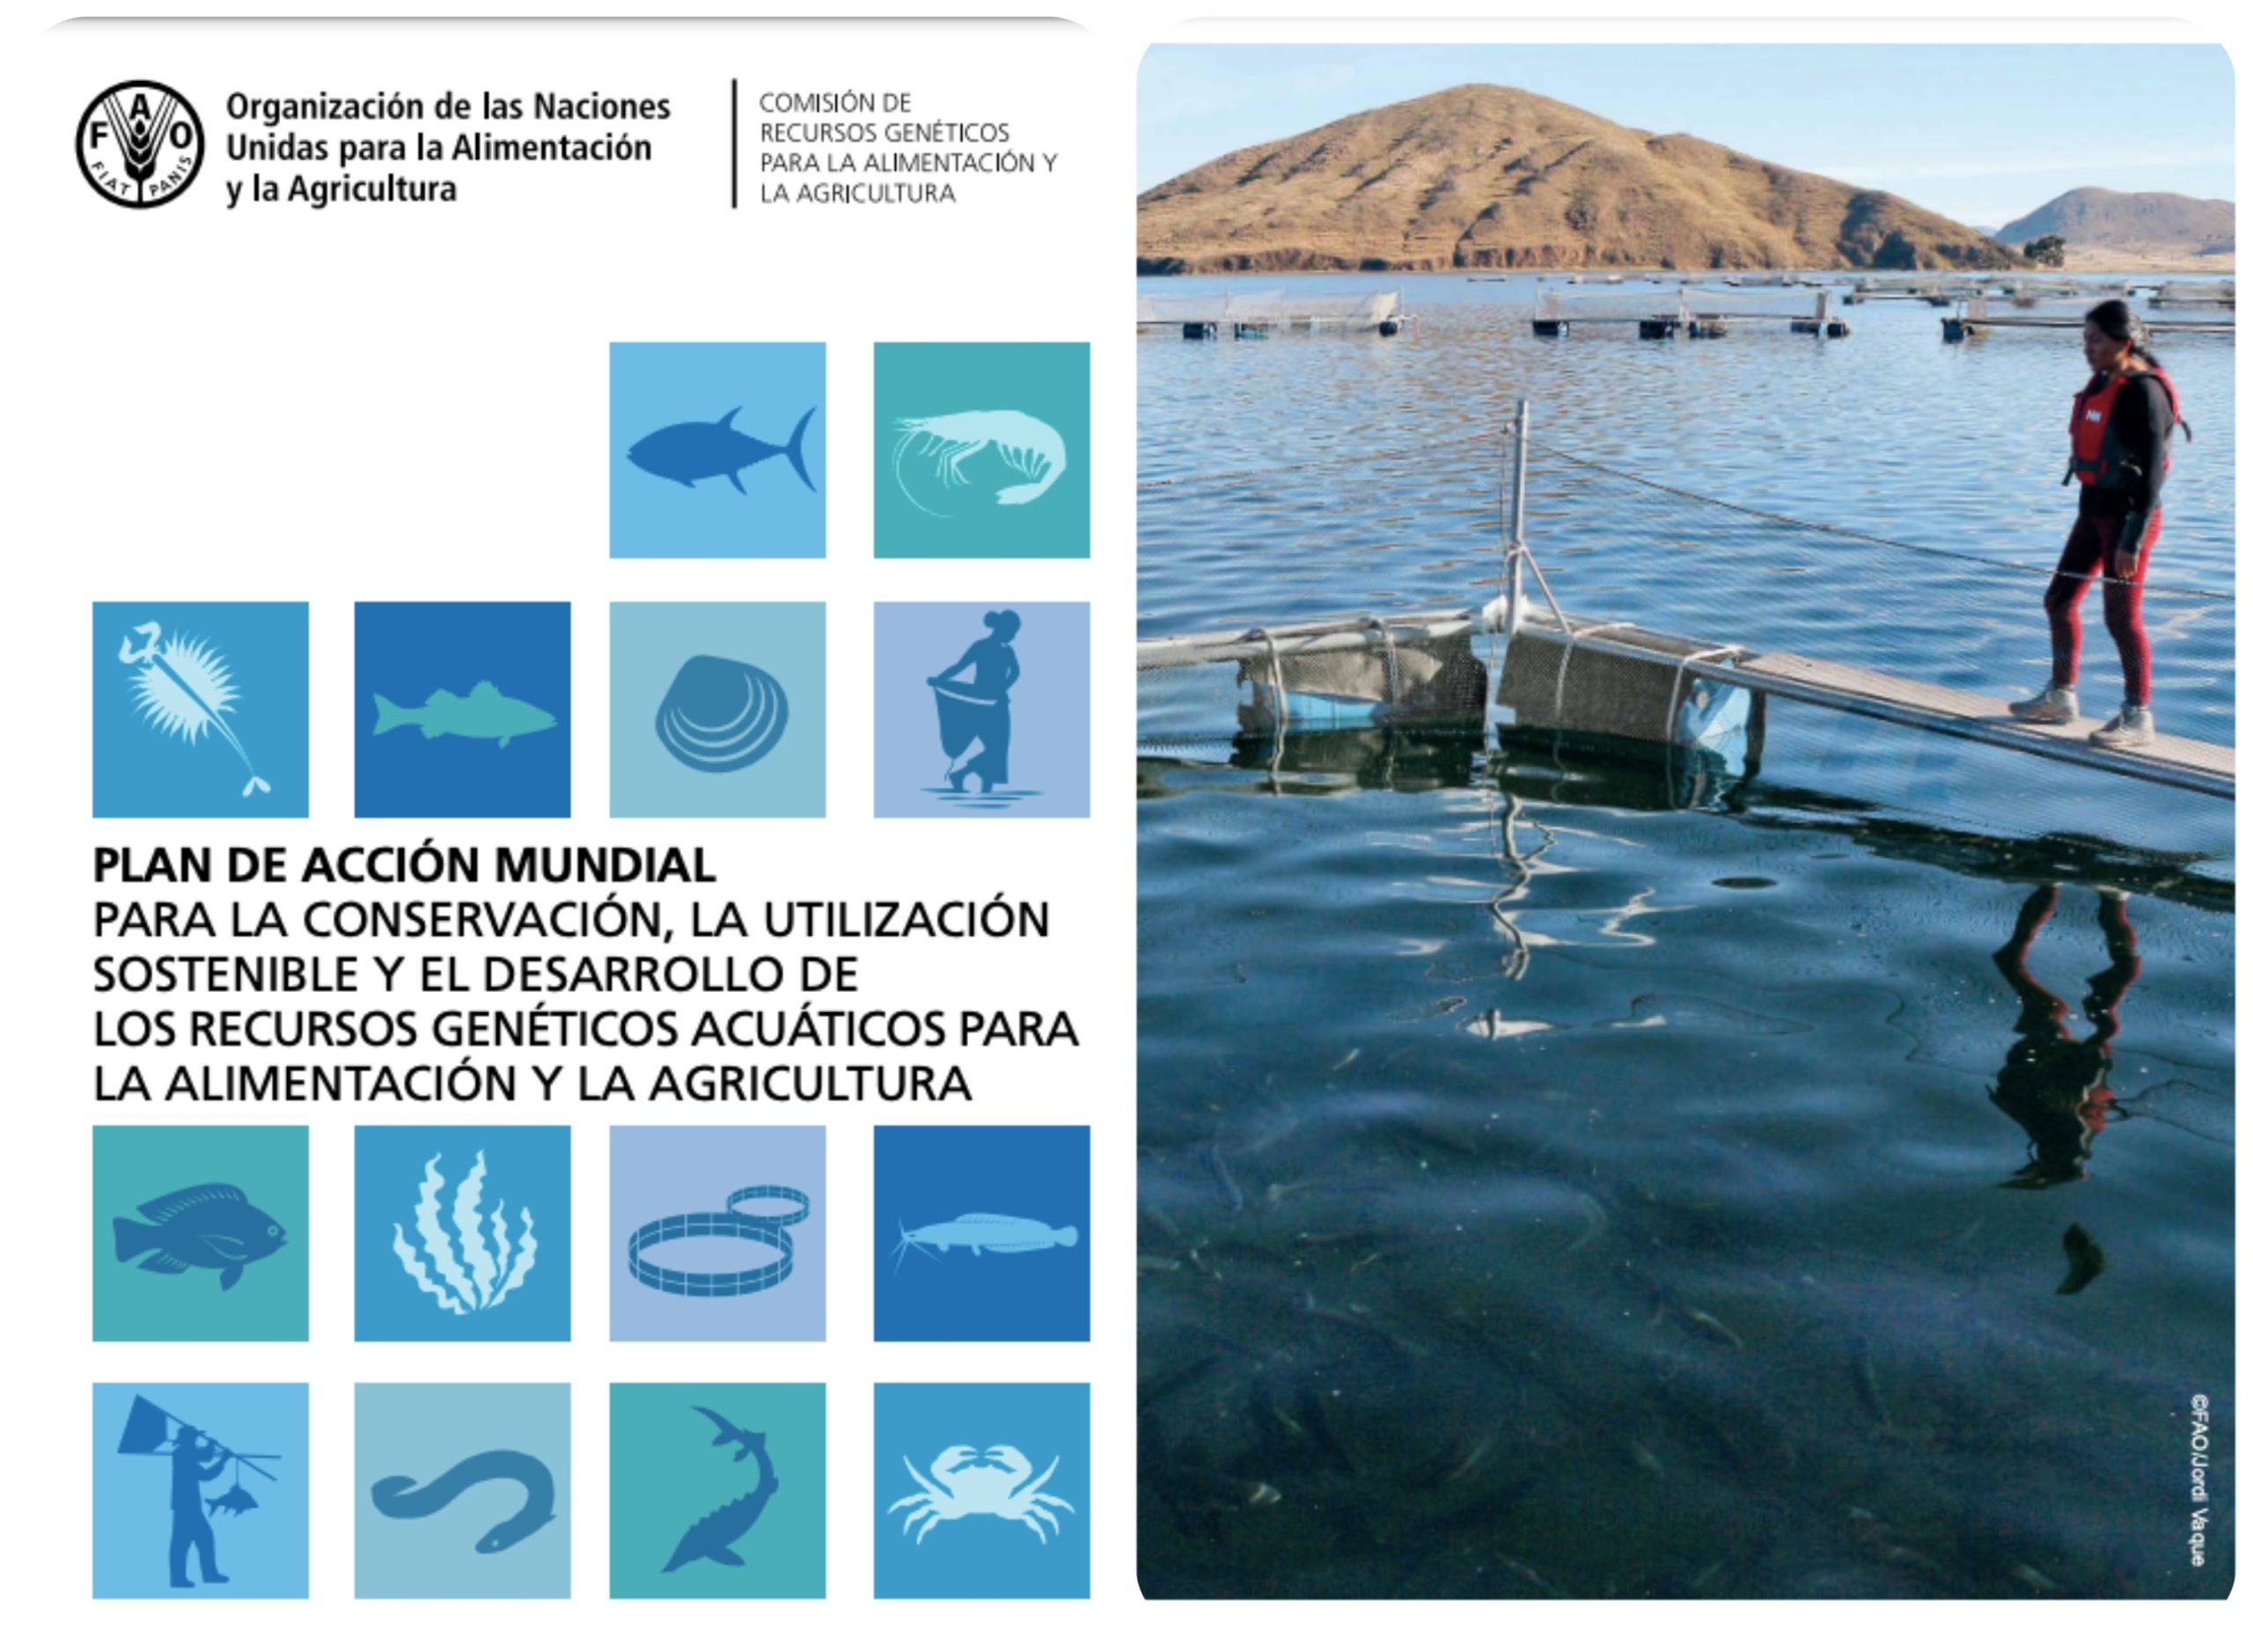 Académica UACh invita a presentación de plan mundial de la FAO para conservación de recursos acuáticos